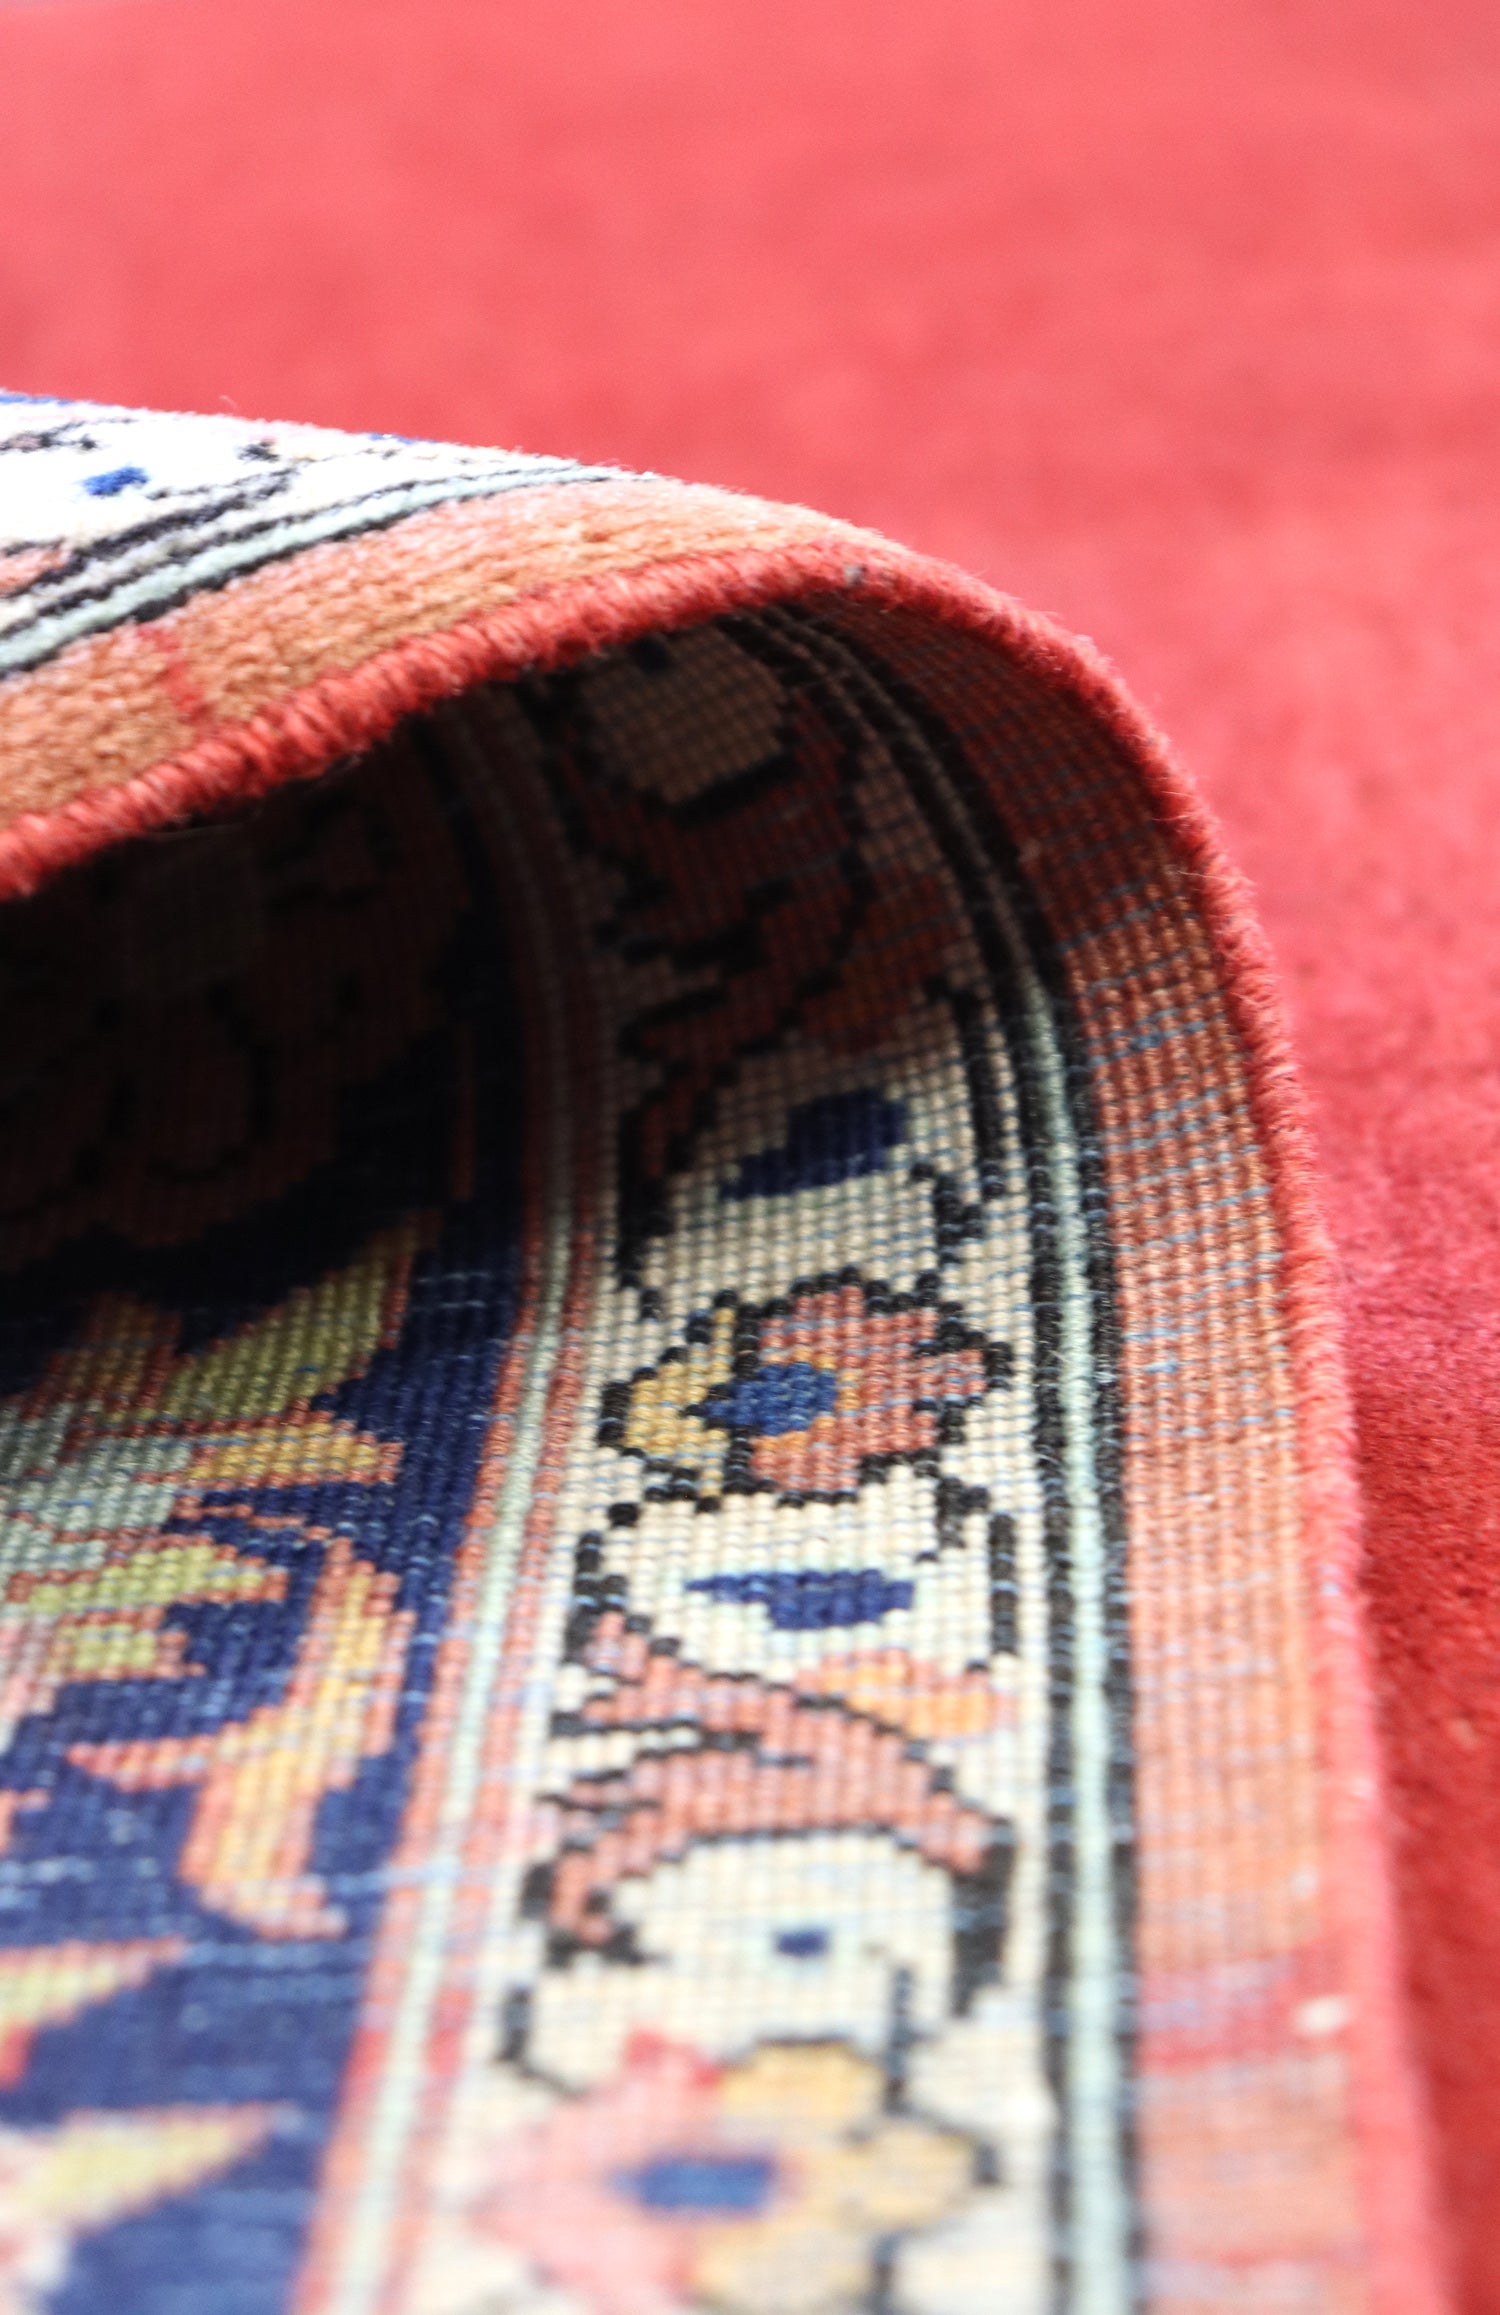 Vintage Keshan Handwoven Traditional Rug, J66196